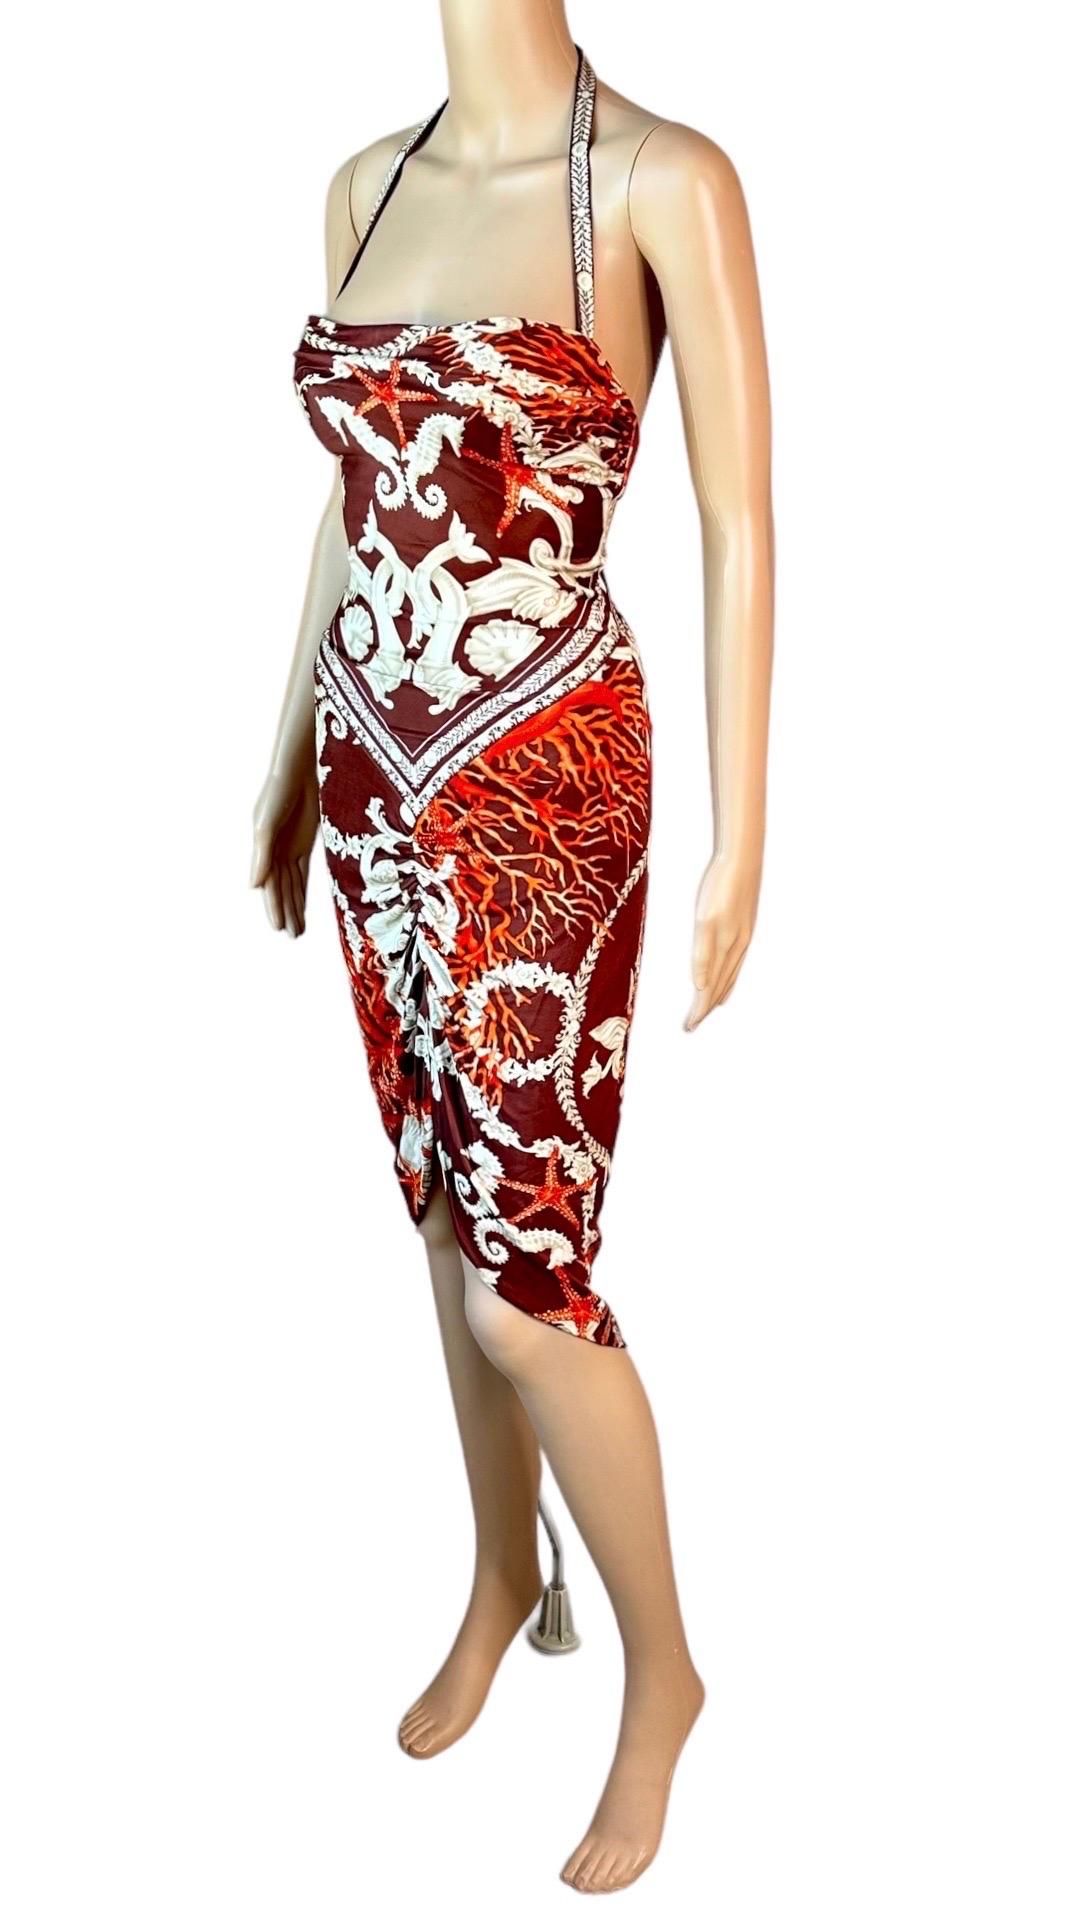 Versace S/S 2005 Embellished Trésor De La Mer Print Cutout Back Halter Dress For Sale 2